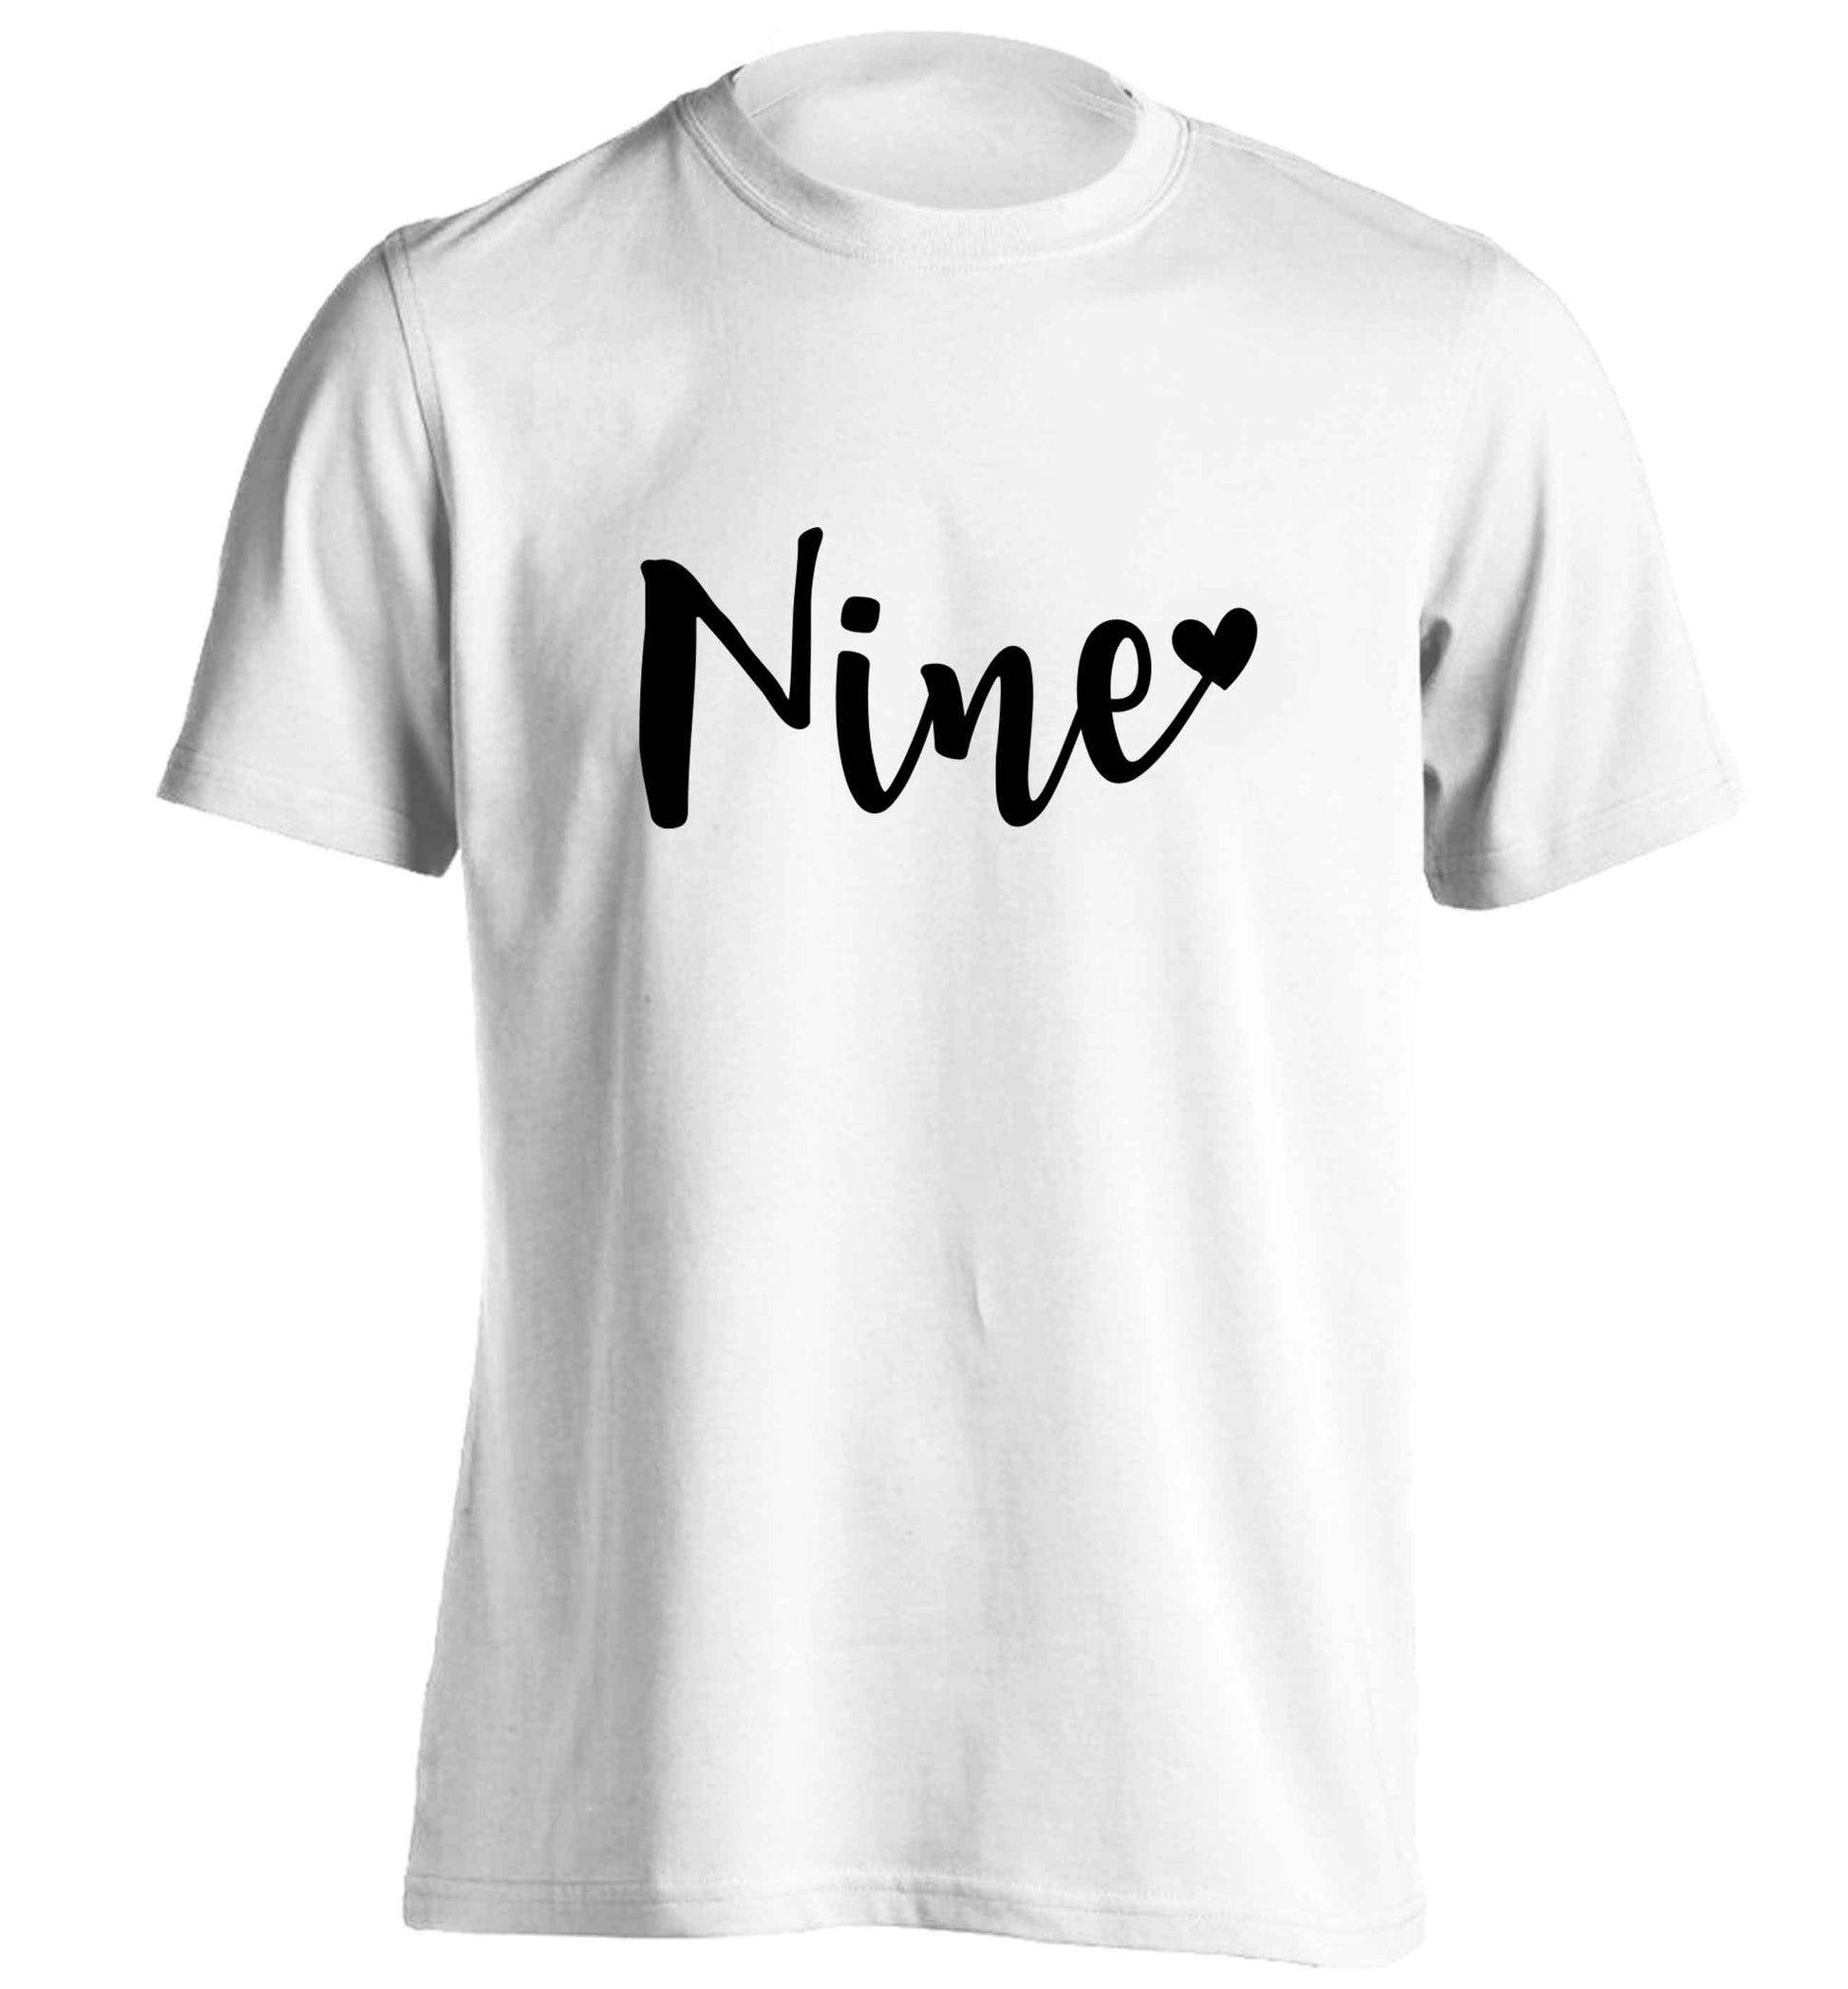 Nine and heart adults unisex white Tshirt 2XL